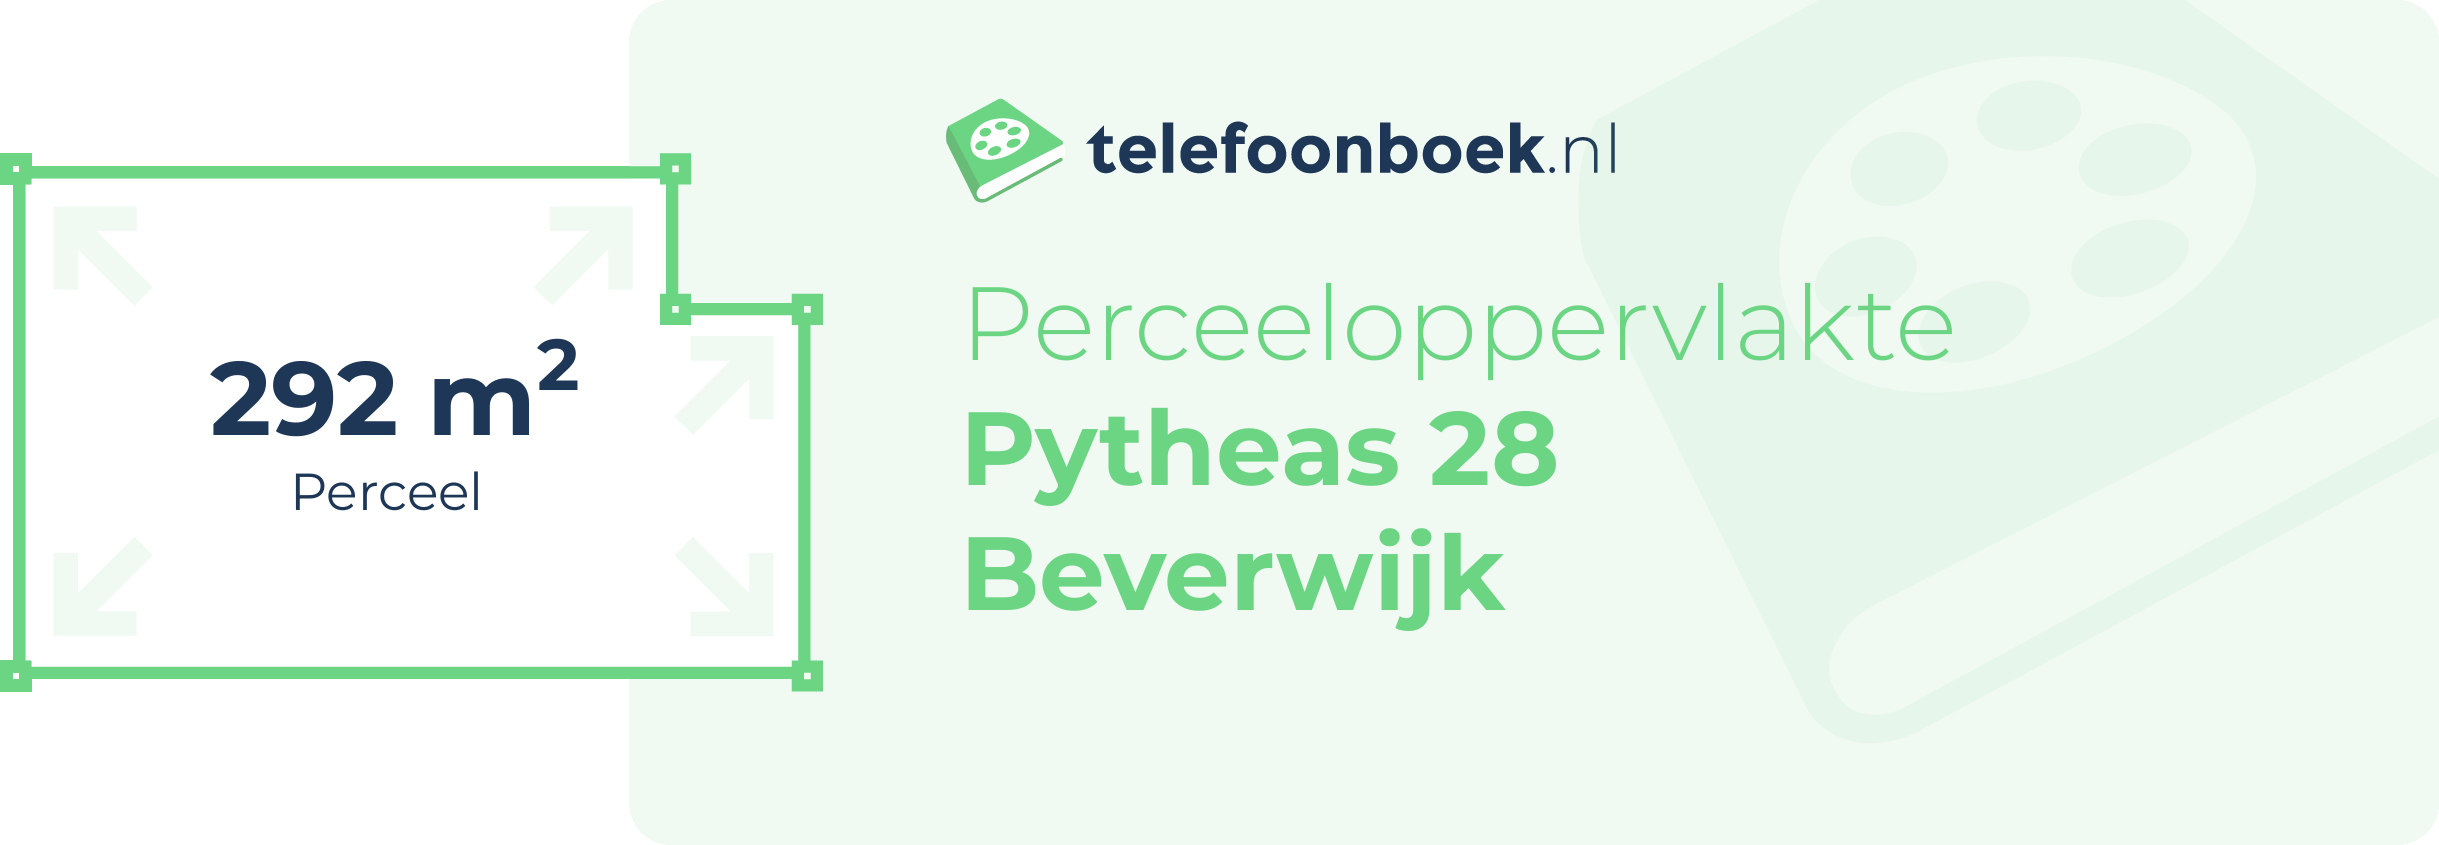 Perceeloppervlakte Pytheas 28 Beverwijk